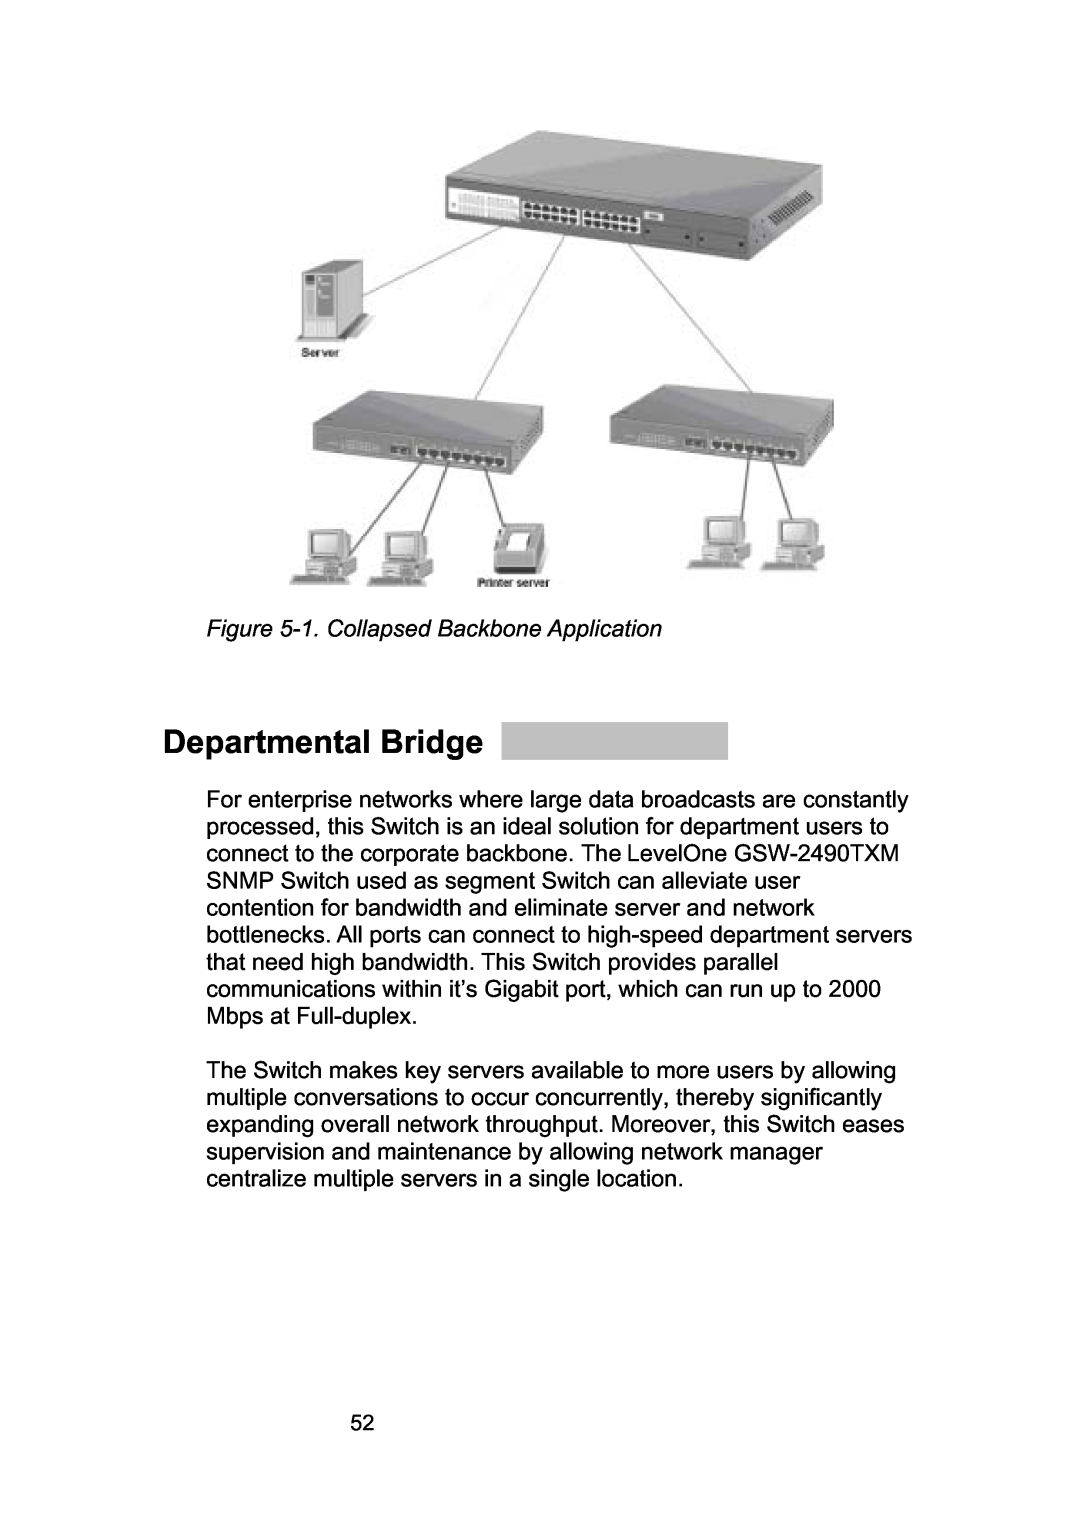 LevelOne GSW-2490TXM manual Departmental Bridge, 1. Collapsed Backbone Application 